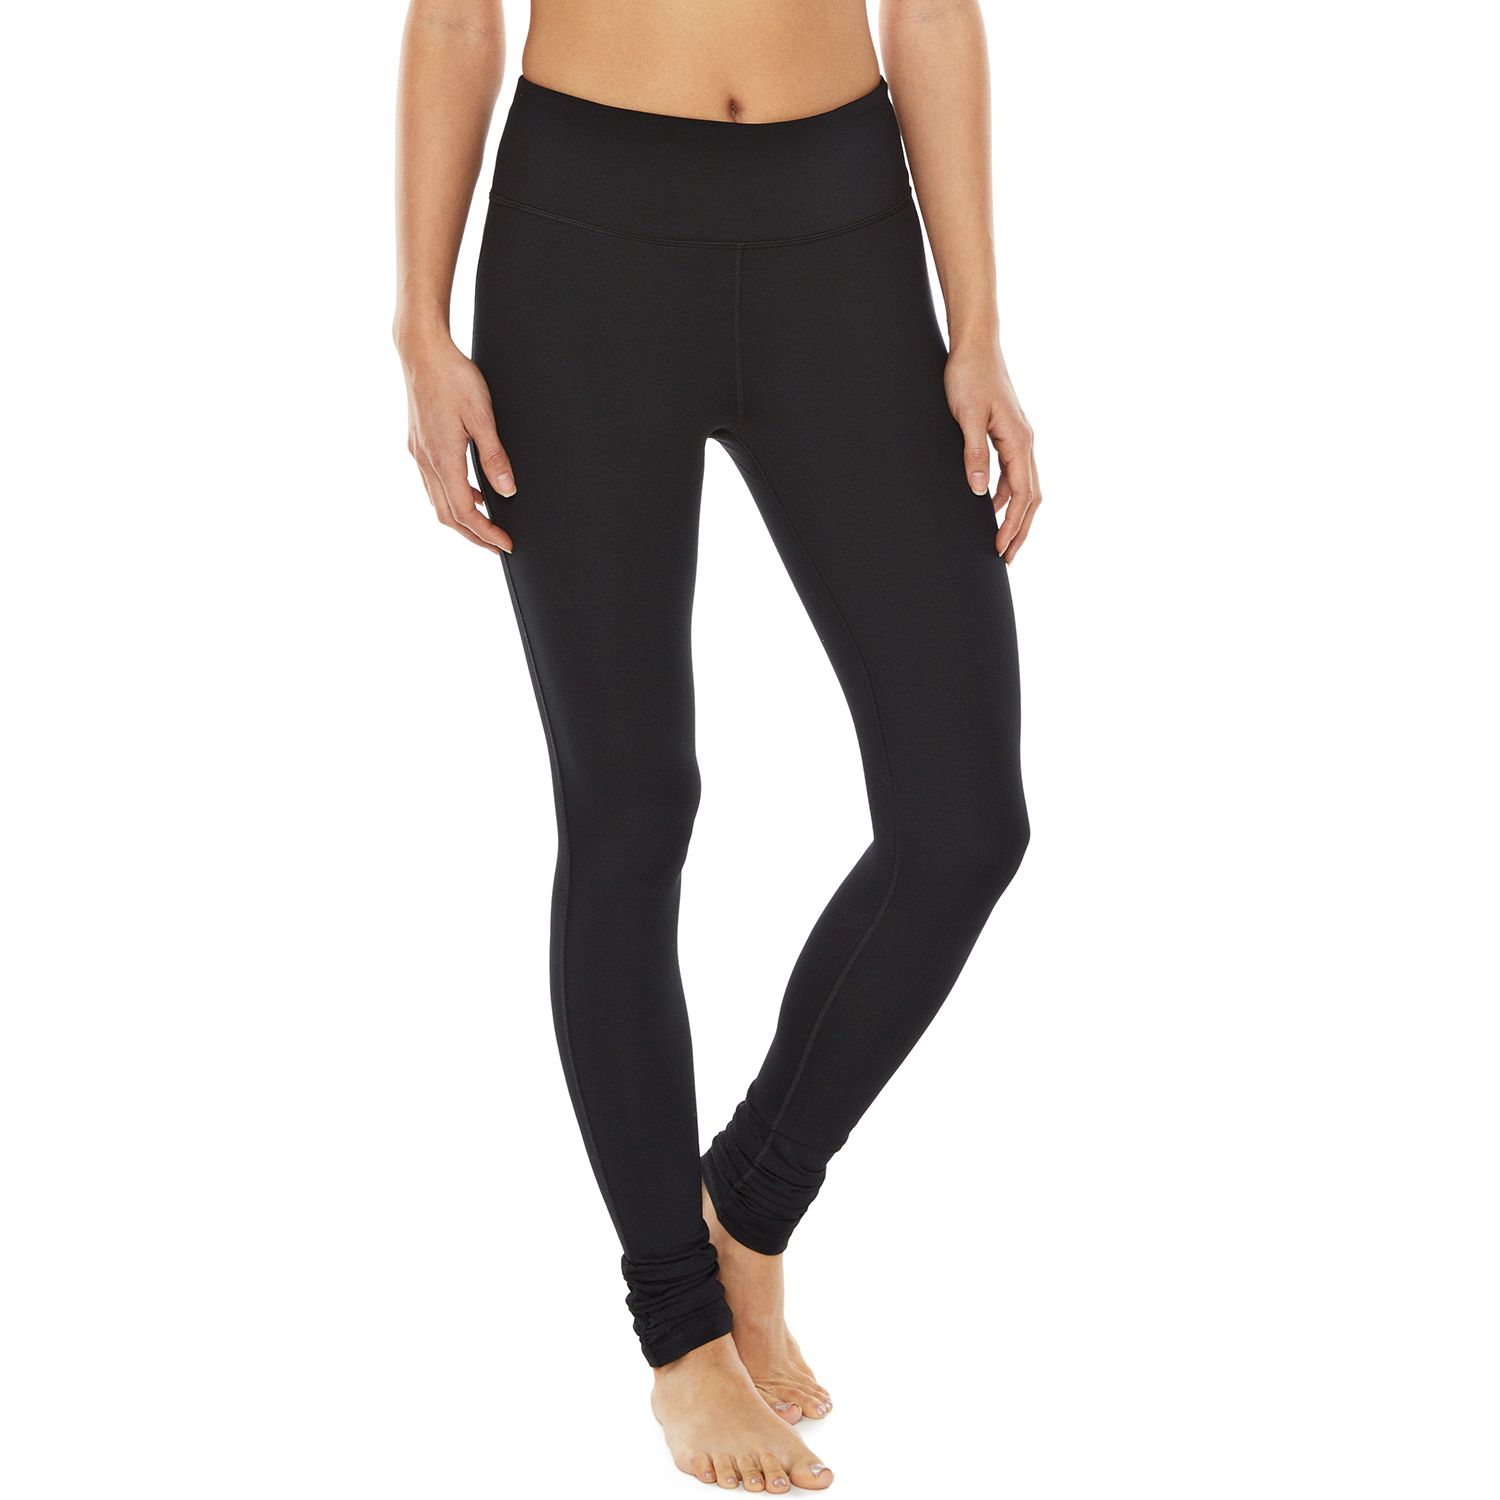 black yoga pants leggings